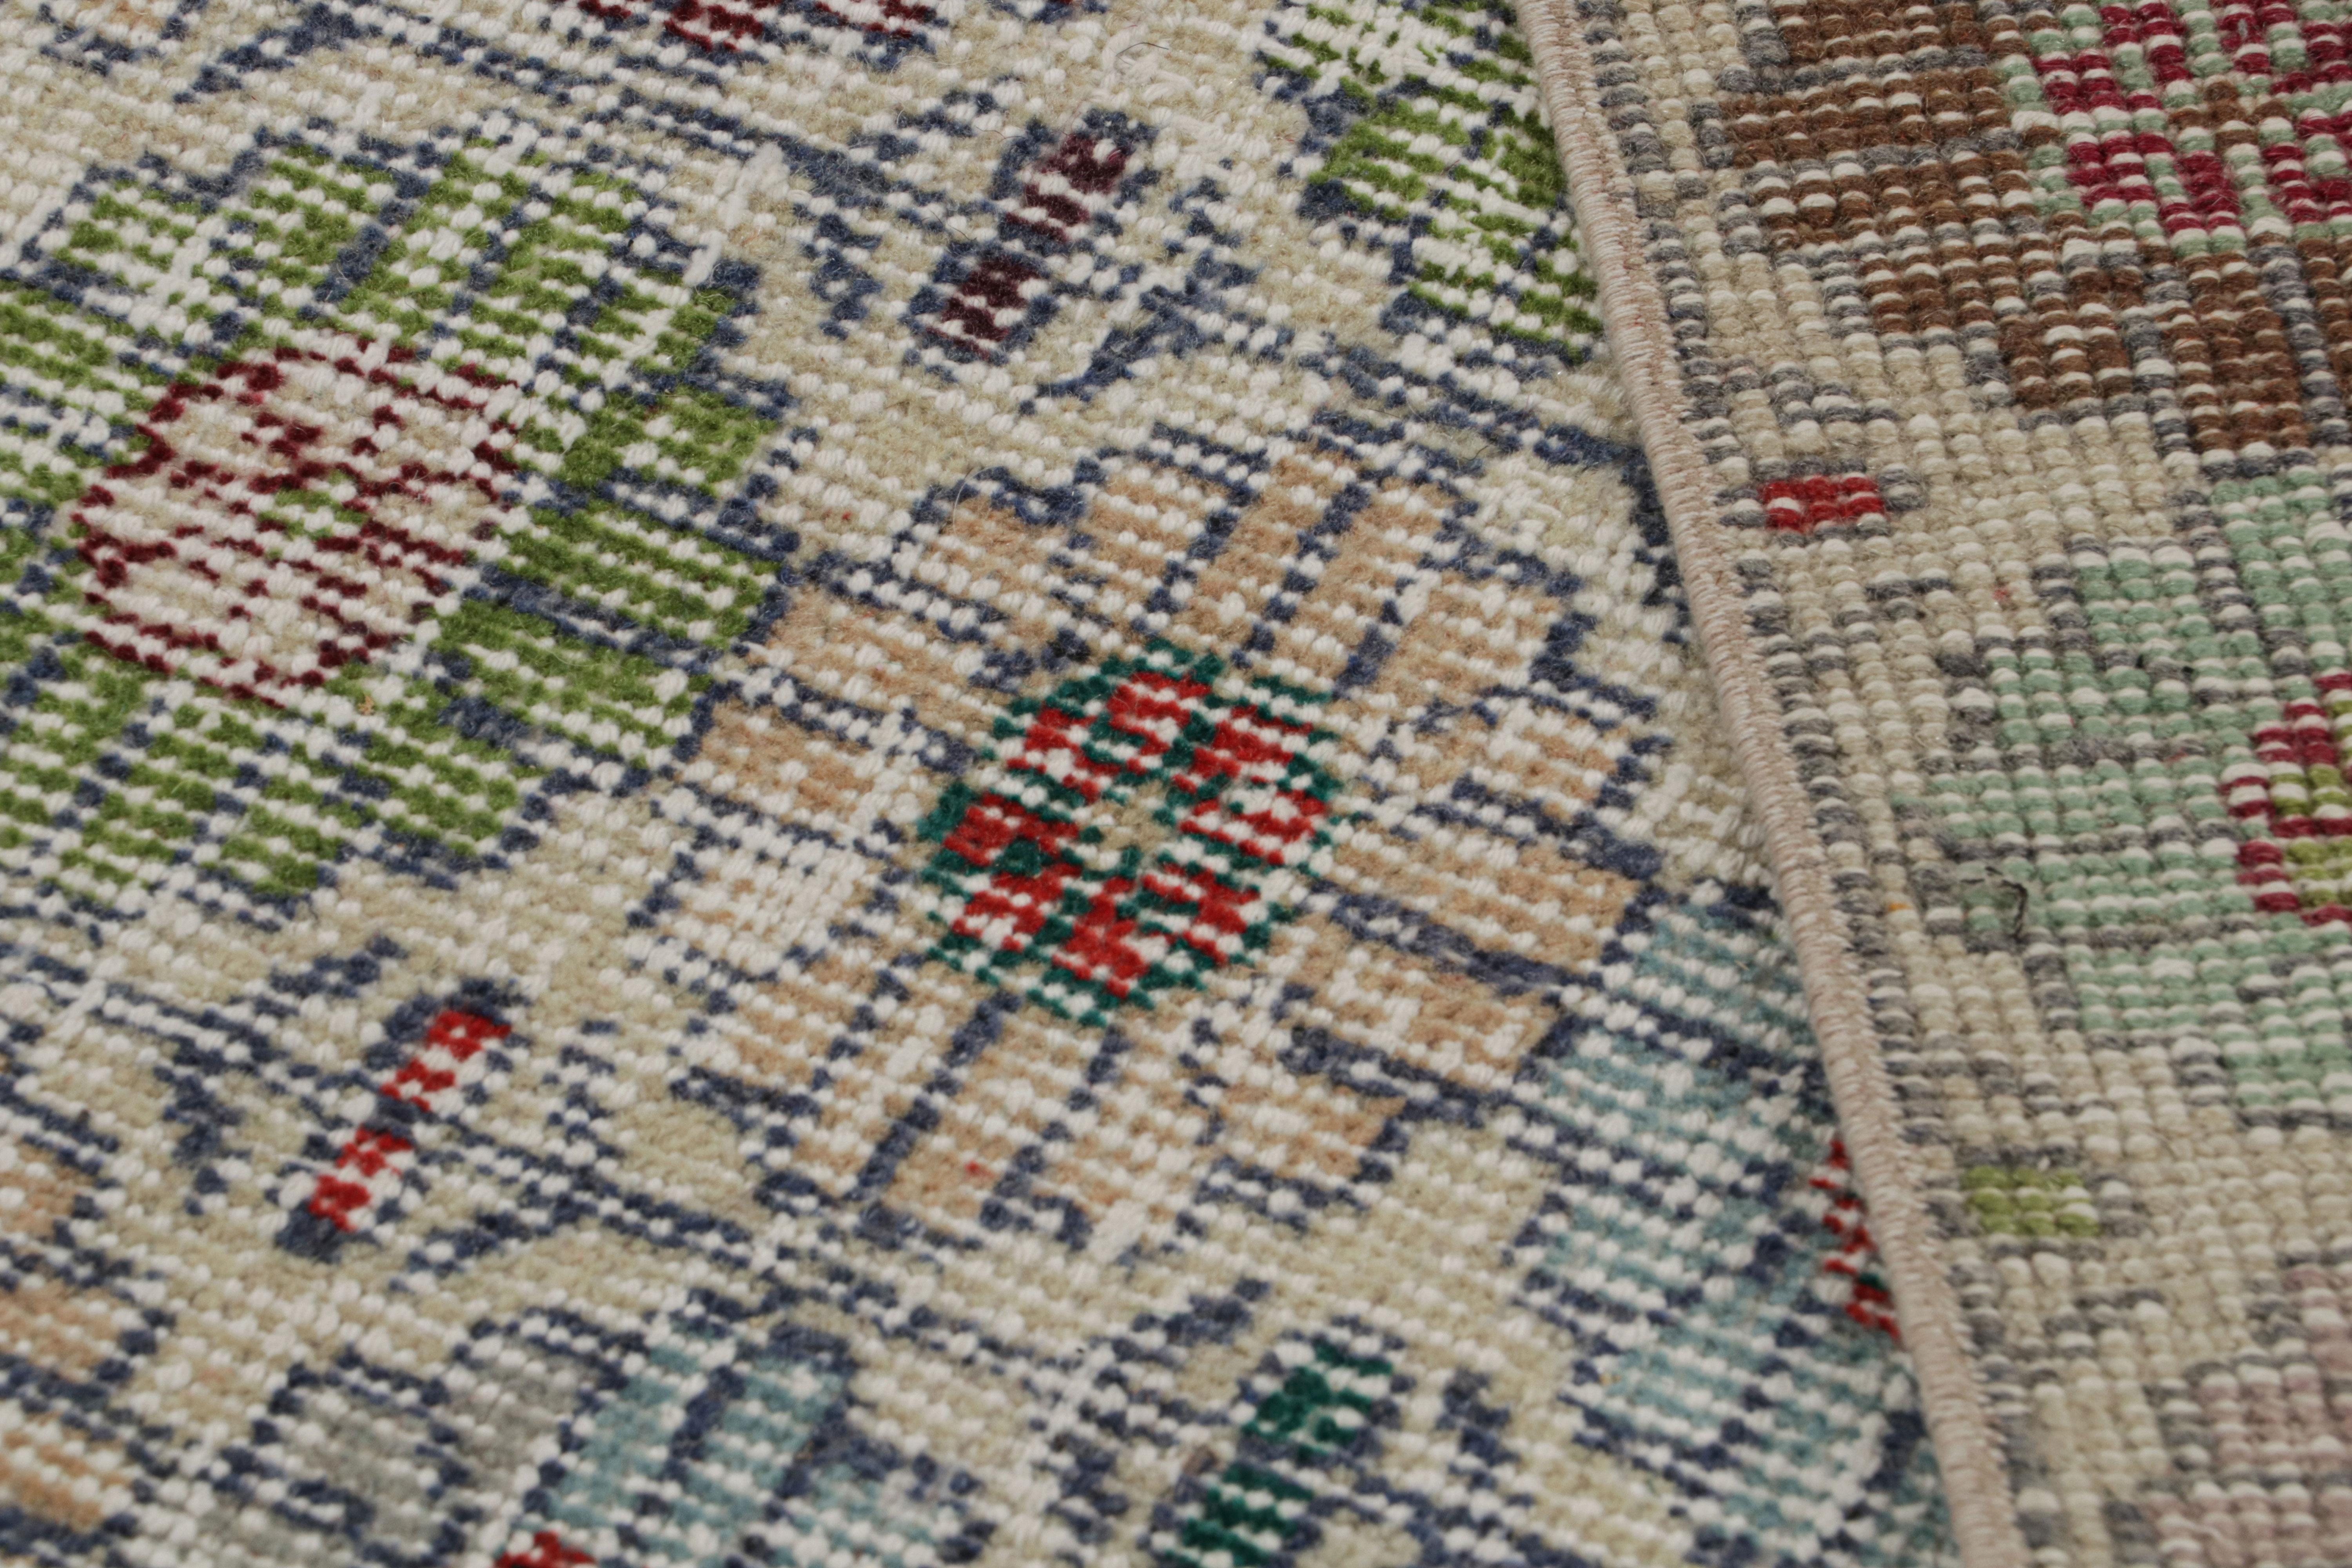 Wool Vintage Zeki Müren Rug with Polychromatic Floral Patterns, from Rug & Kilim  For Sale